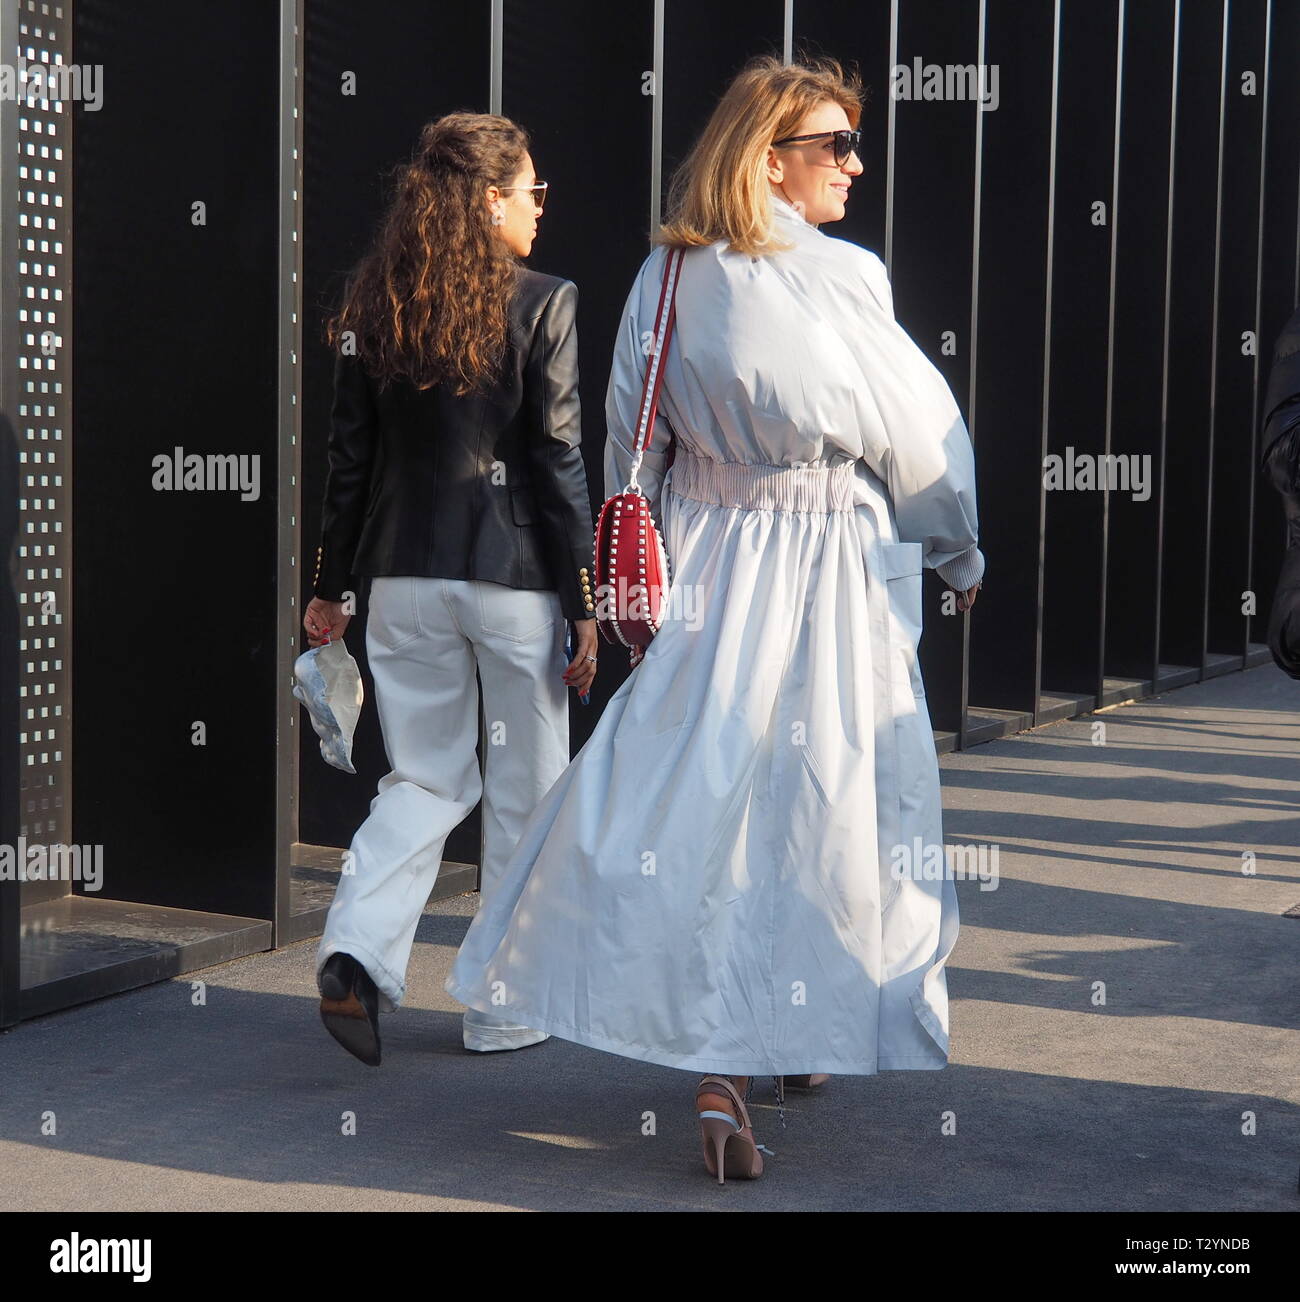 MILAN, Italy: 20 February 2019: Fashion bloggers street style